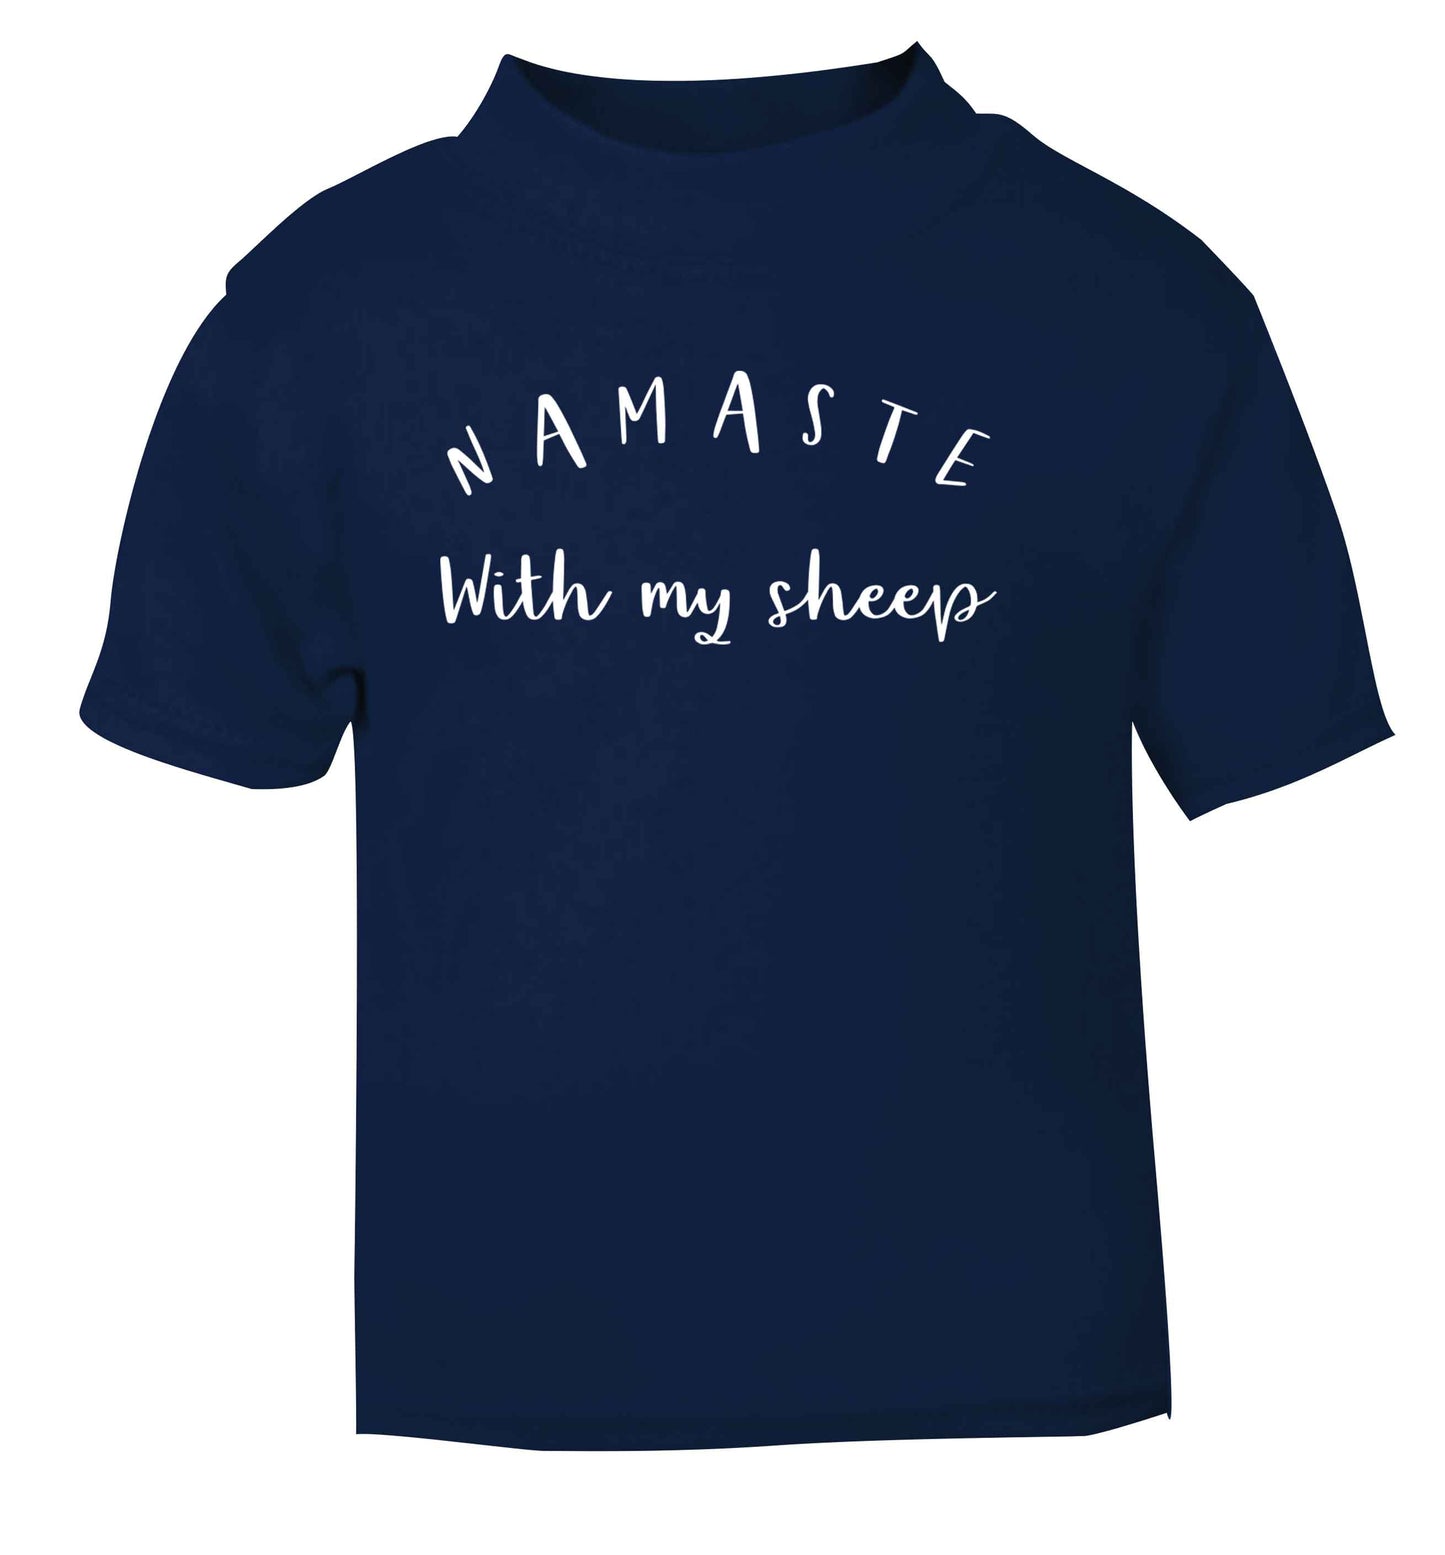 Namaste with my sheep navy Baby Toddler Tshirt 2 Years